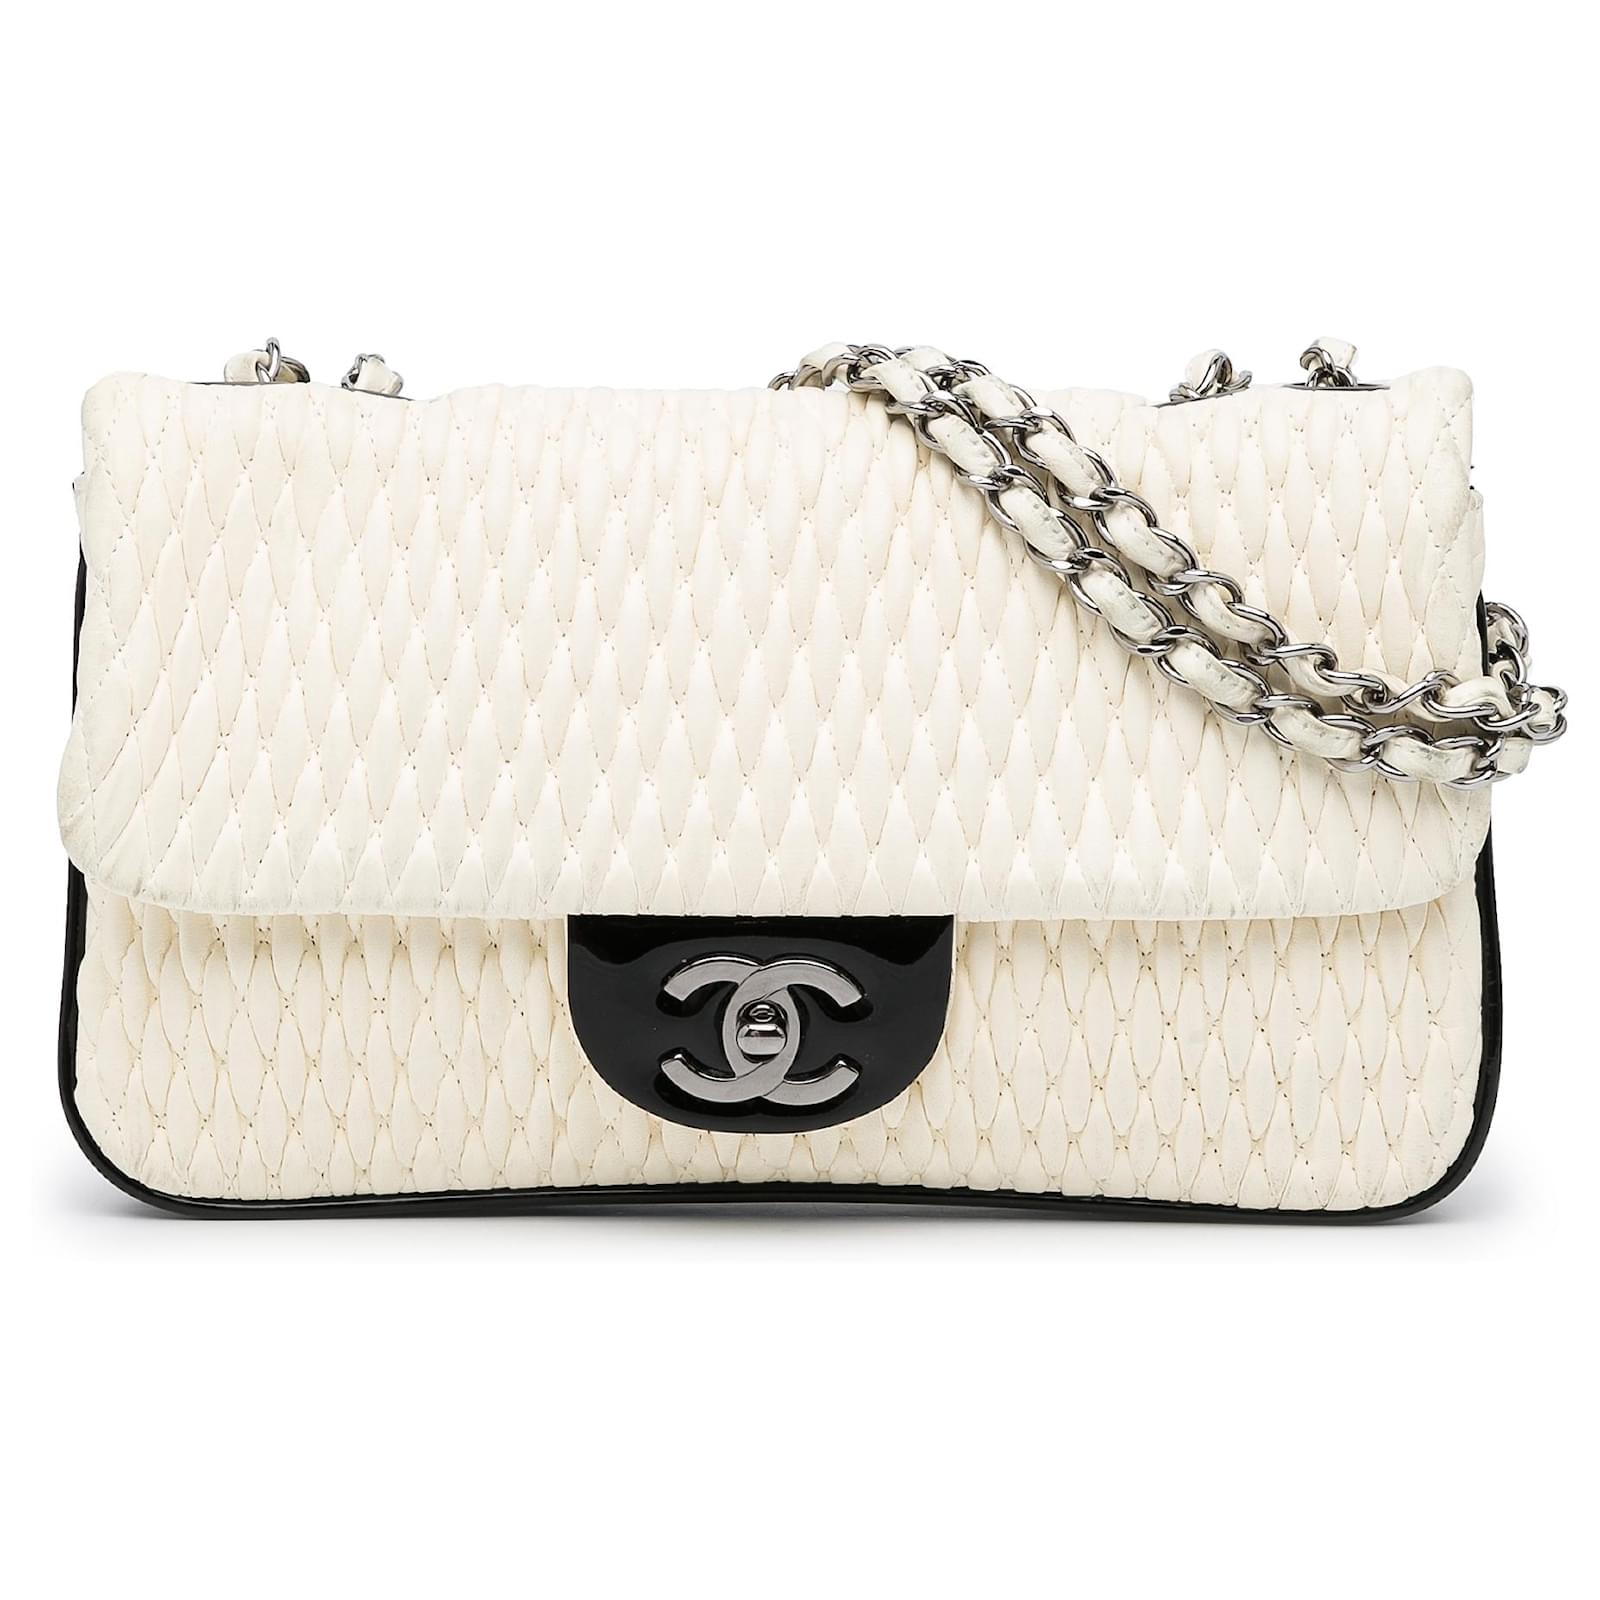 Chanel White CC Matelasse Flap Bag Black Leather Patent leather